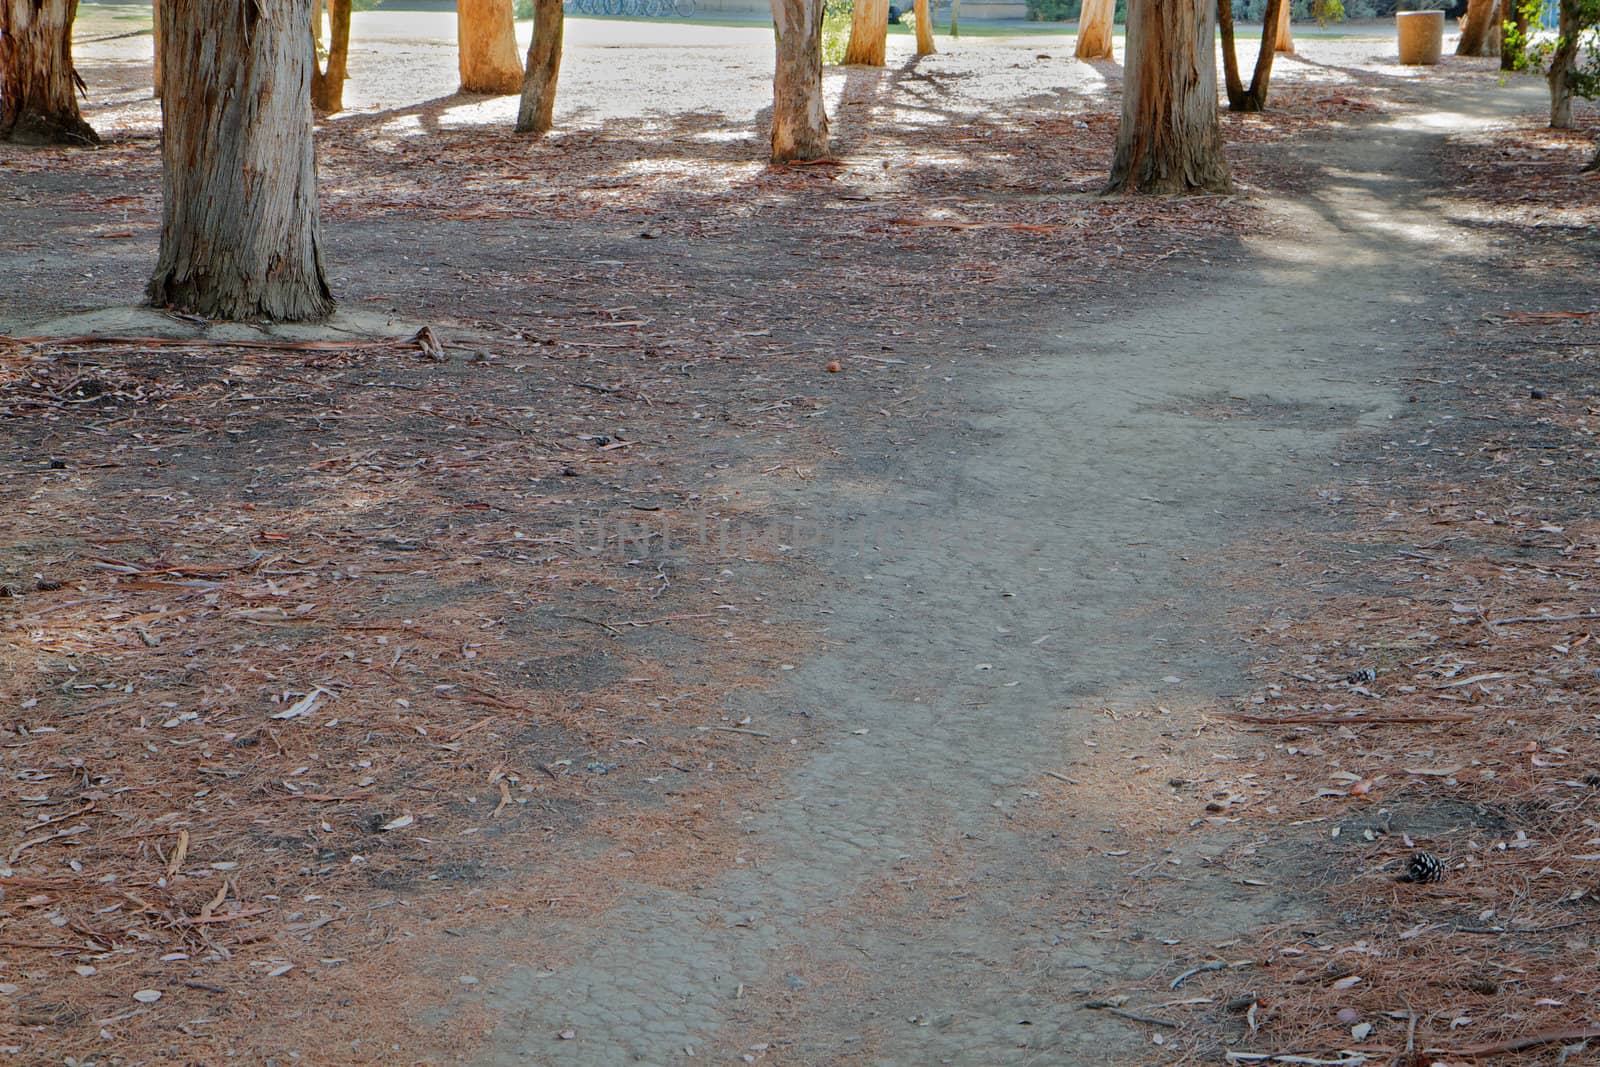 Dirt park path through grove of eucalyptus trees